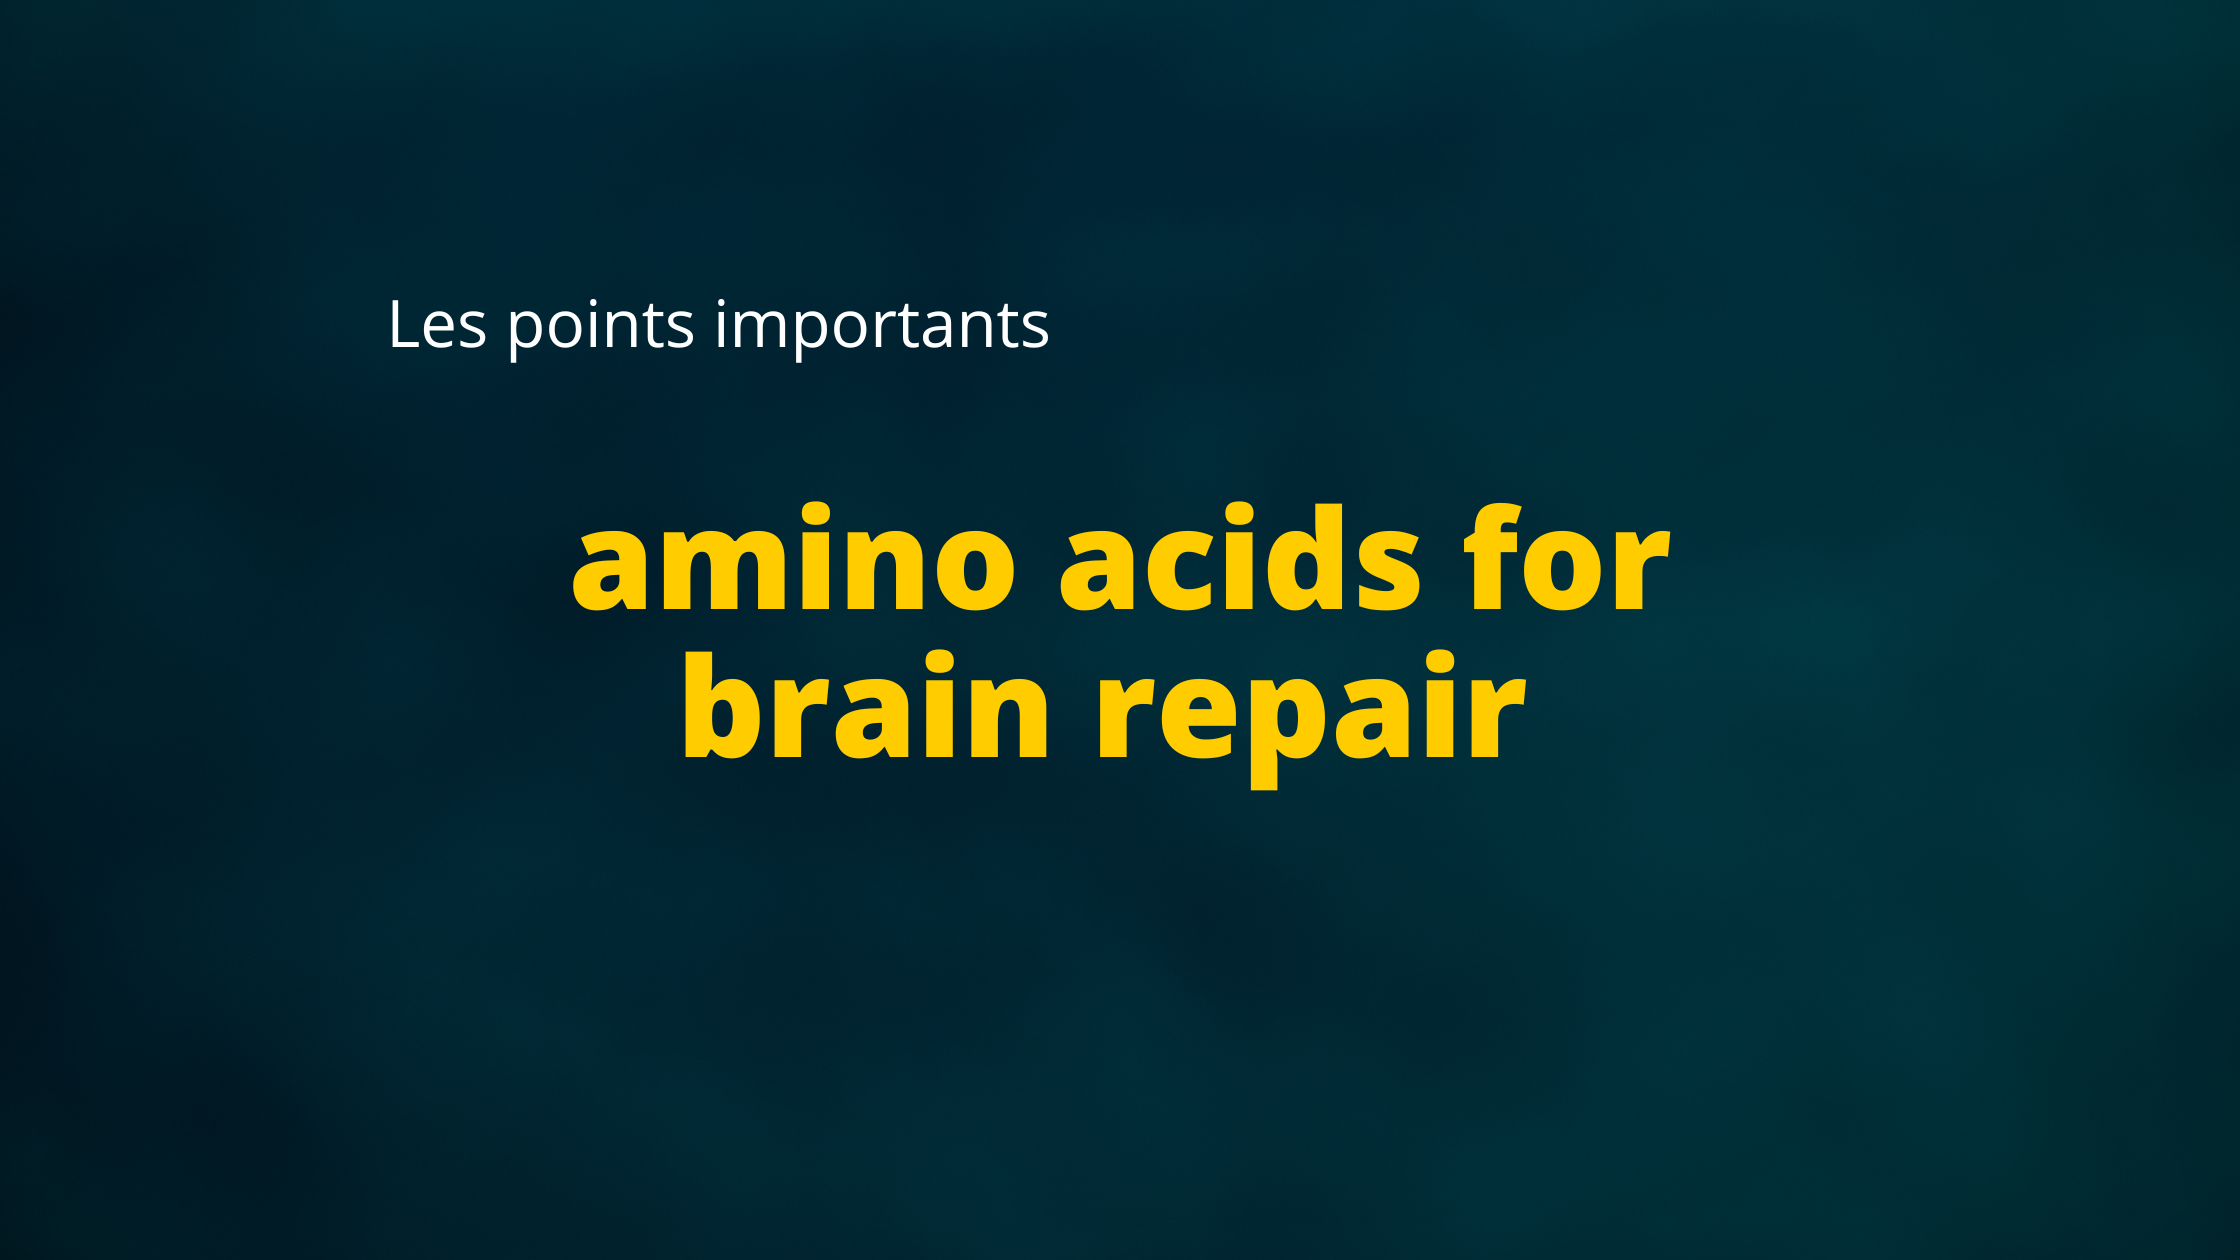 amino acids for brain repair | Les points importants